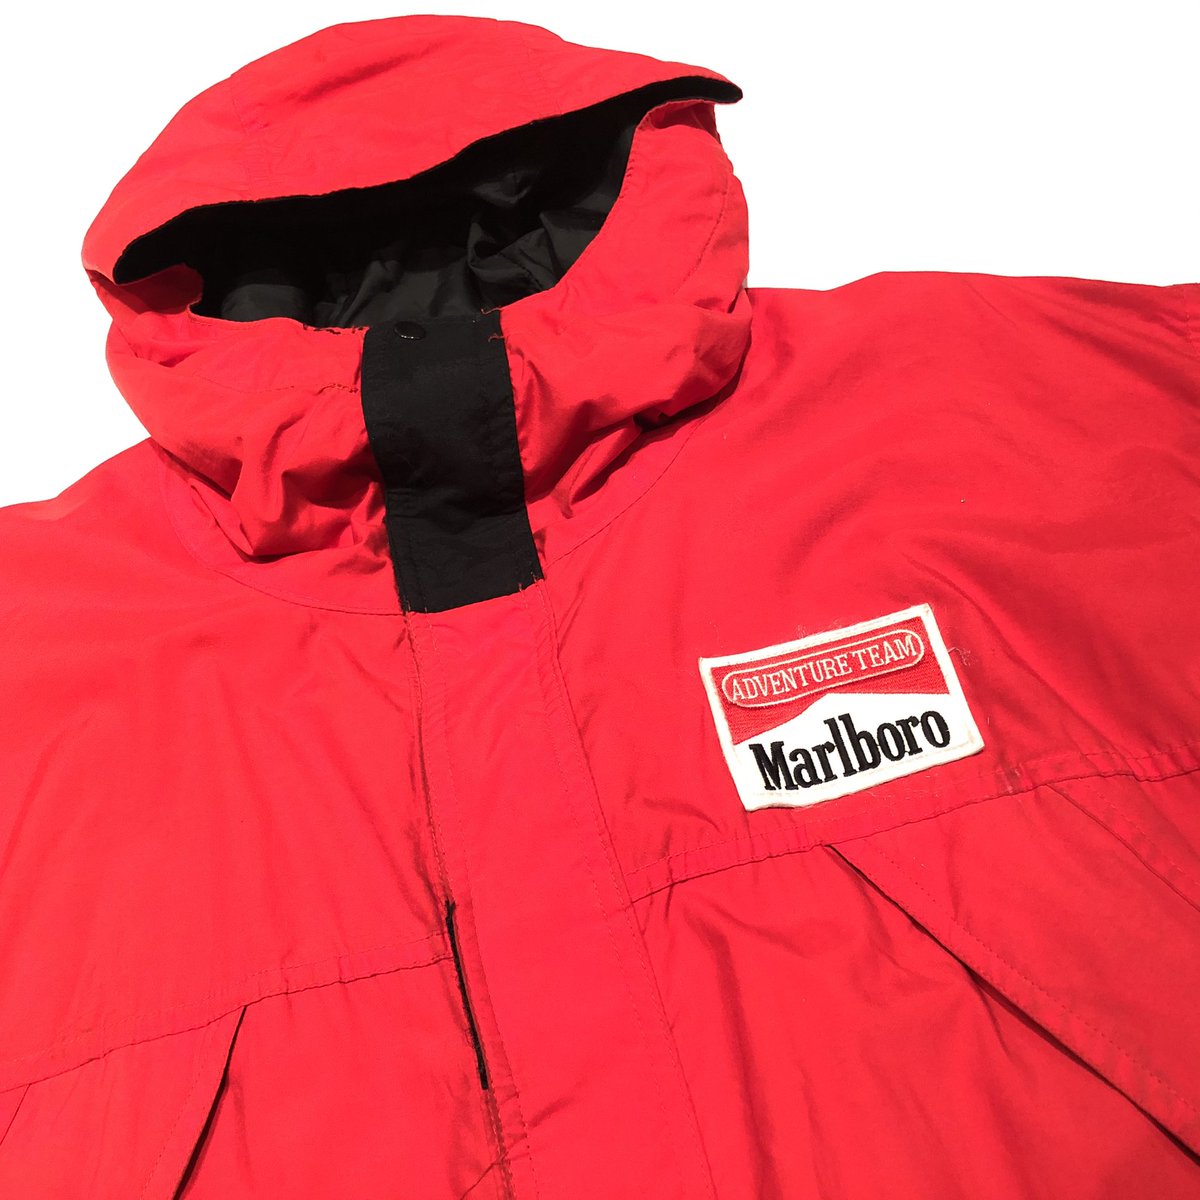 Taramake Marlboro Adventure Team Hooded Nylon Jacket 赤マル Taramake Used Vintage 古着屋 T Co V6jri5dqla Twitter